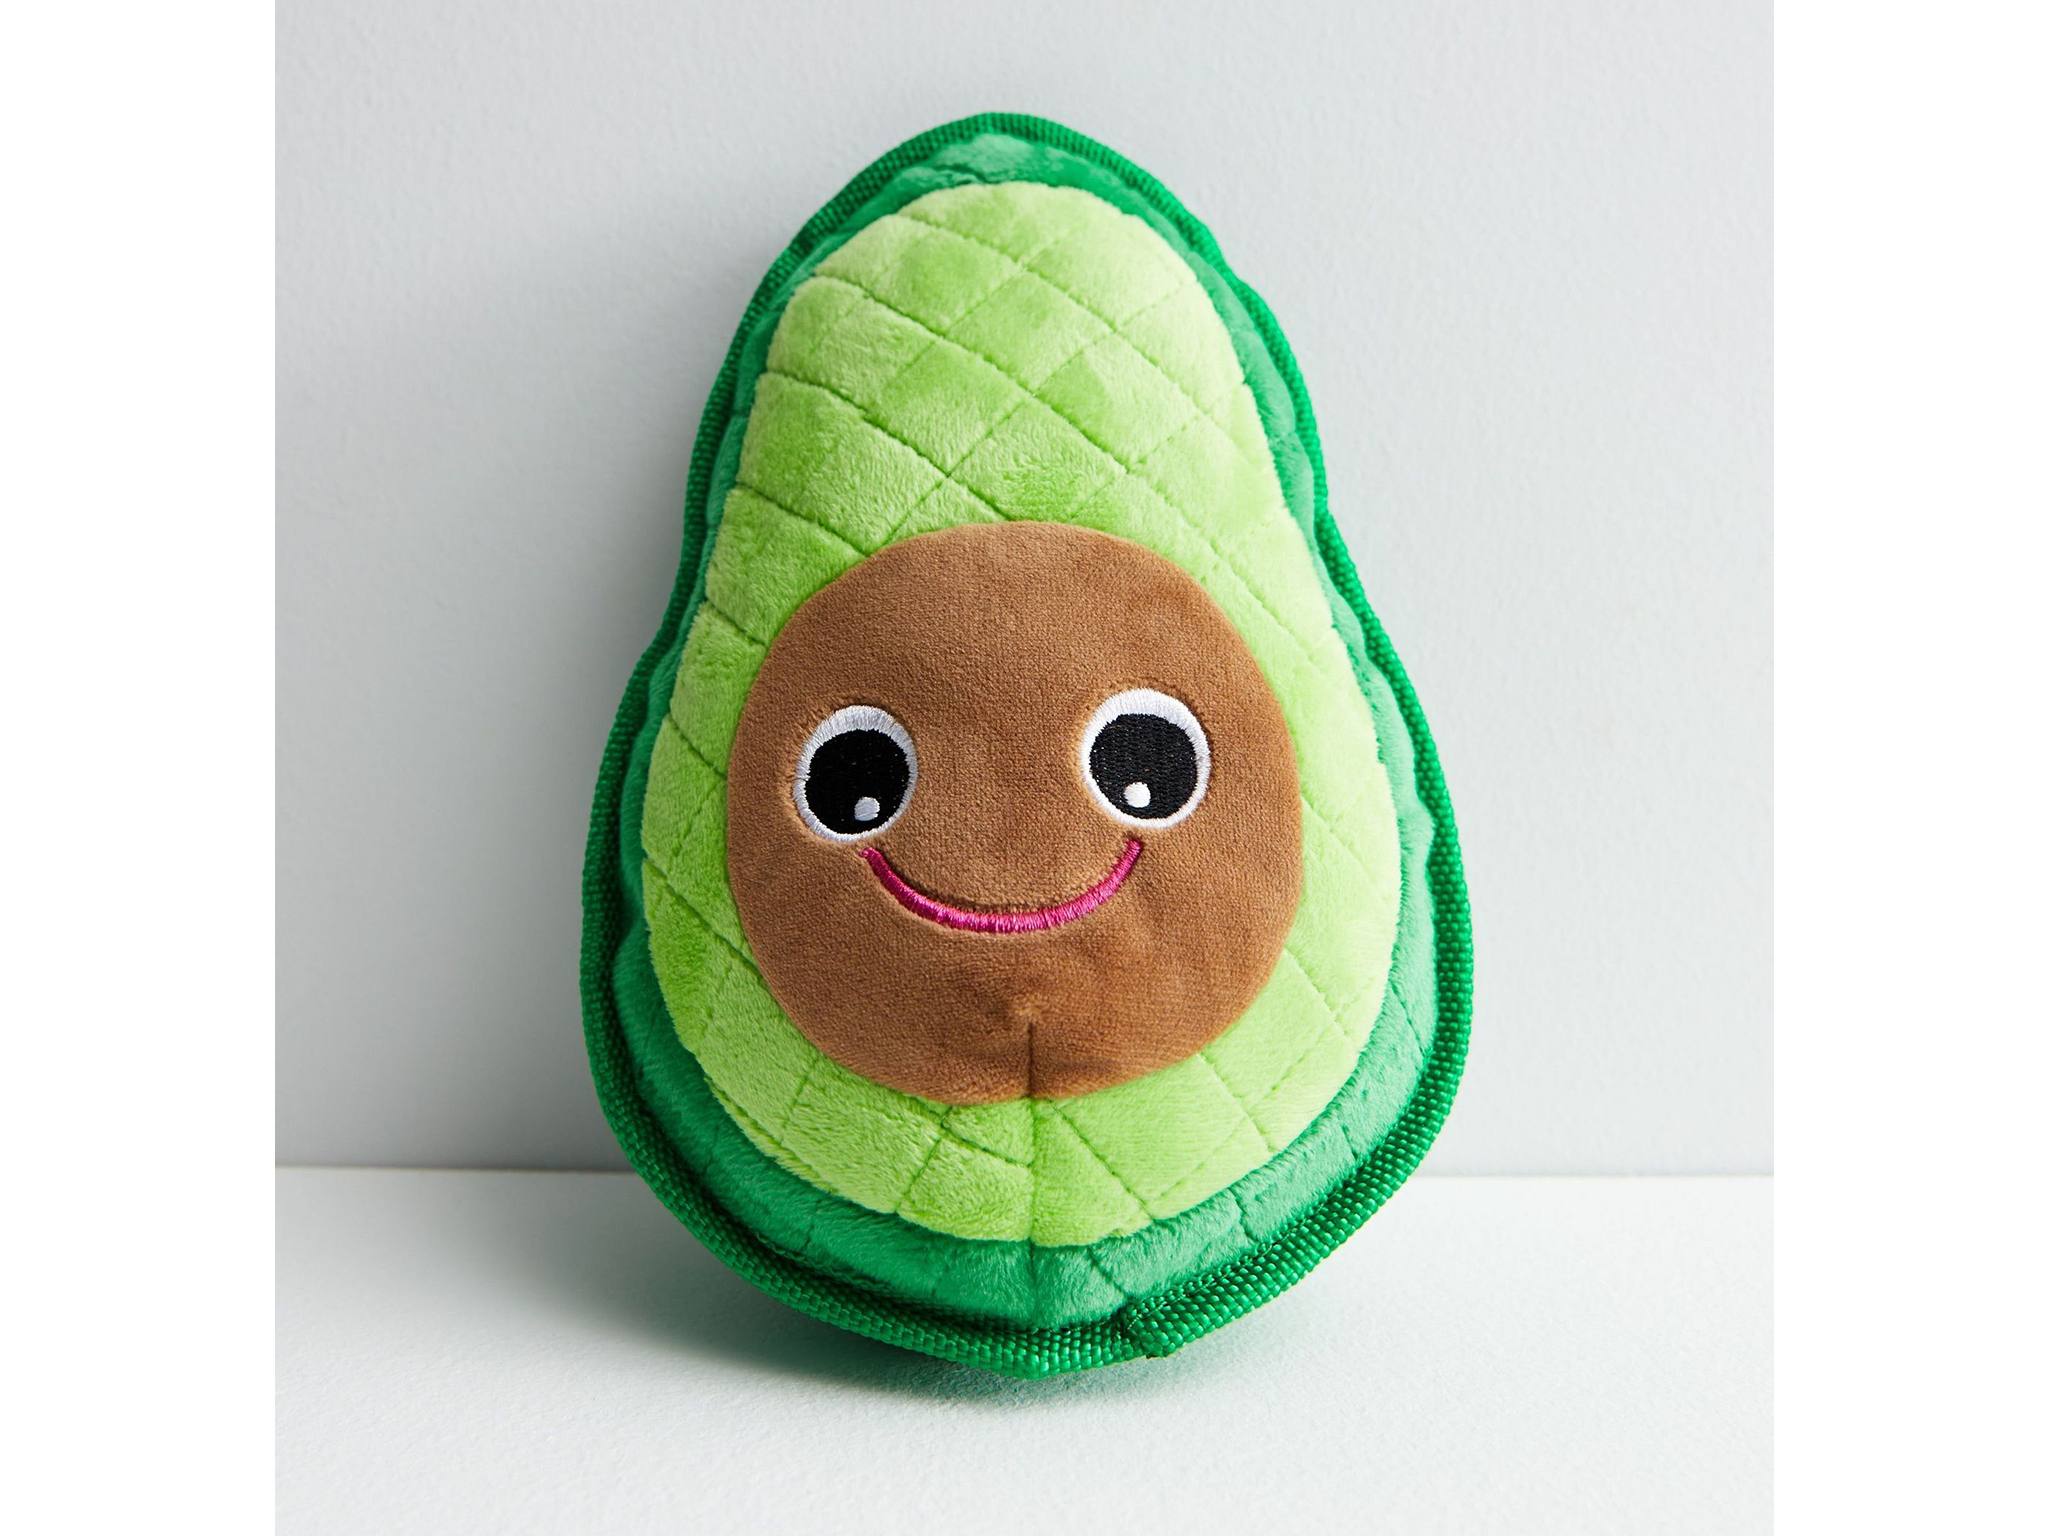 New Look green avocado dog toy